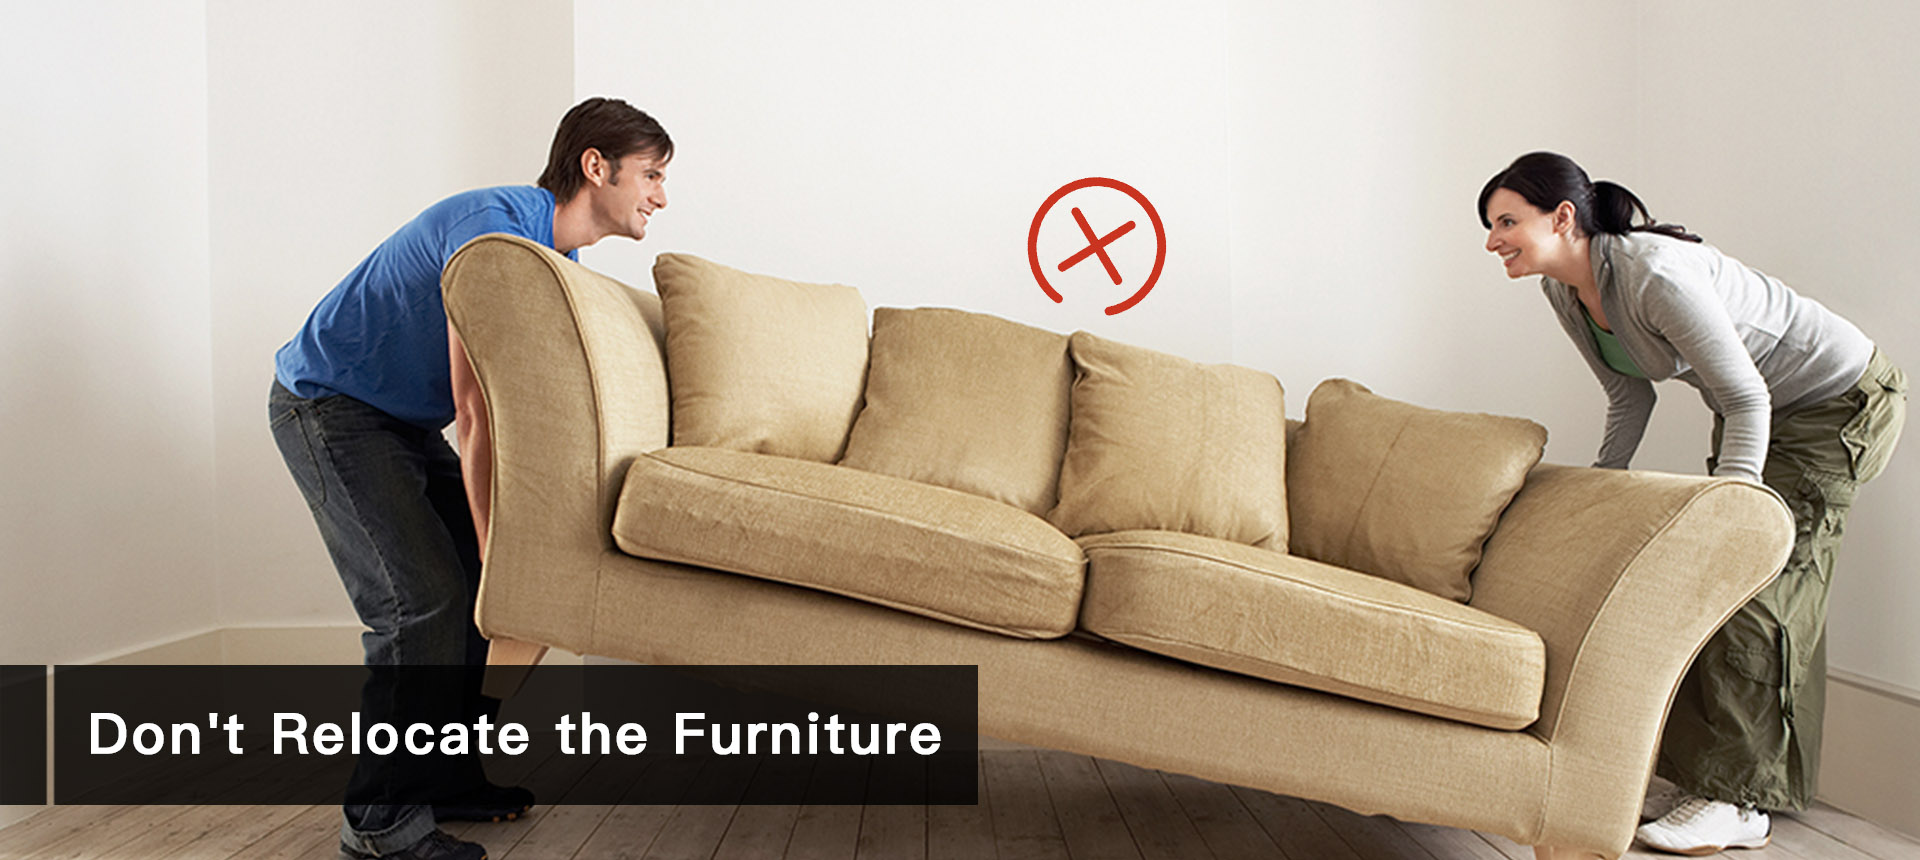 Don't Relocate the Furniture